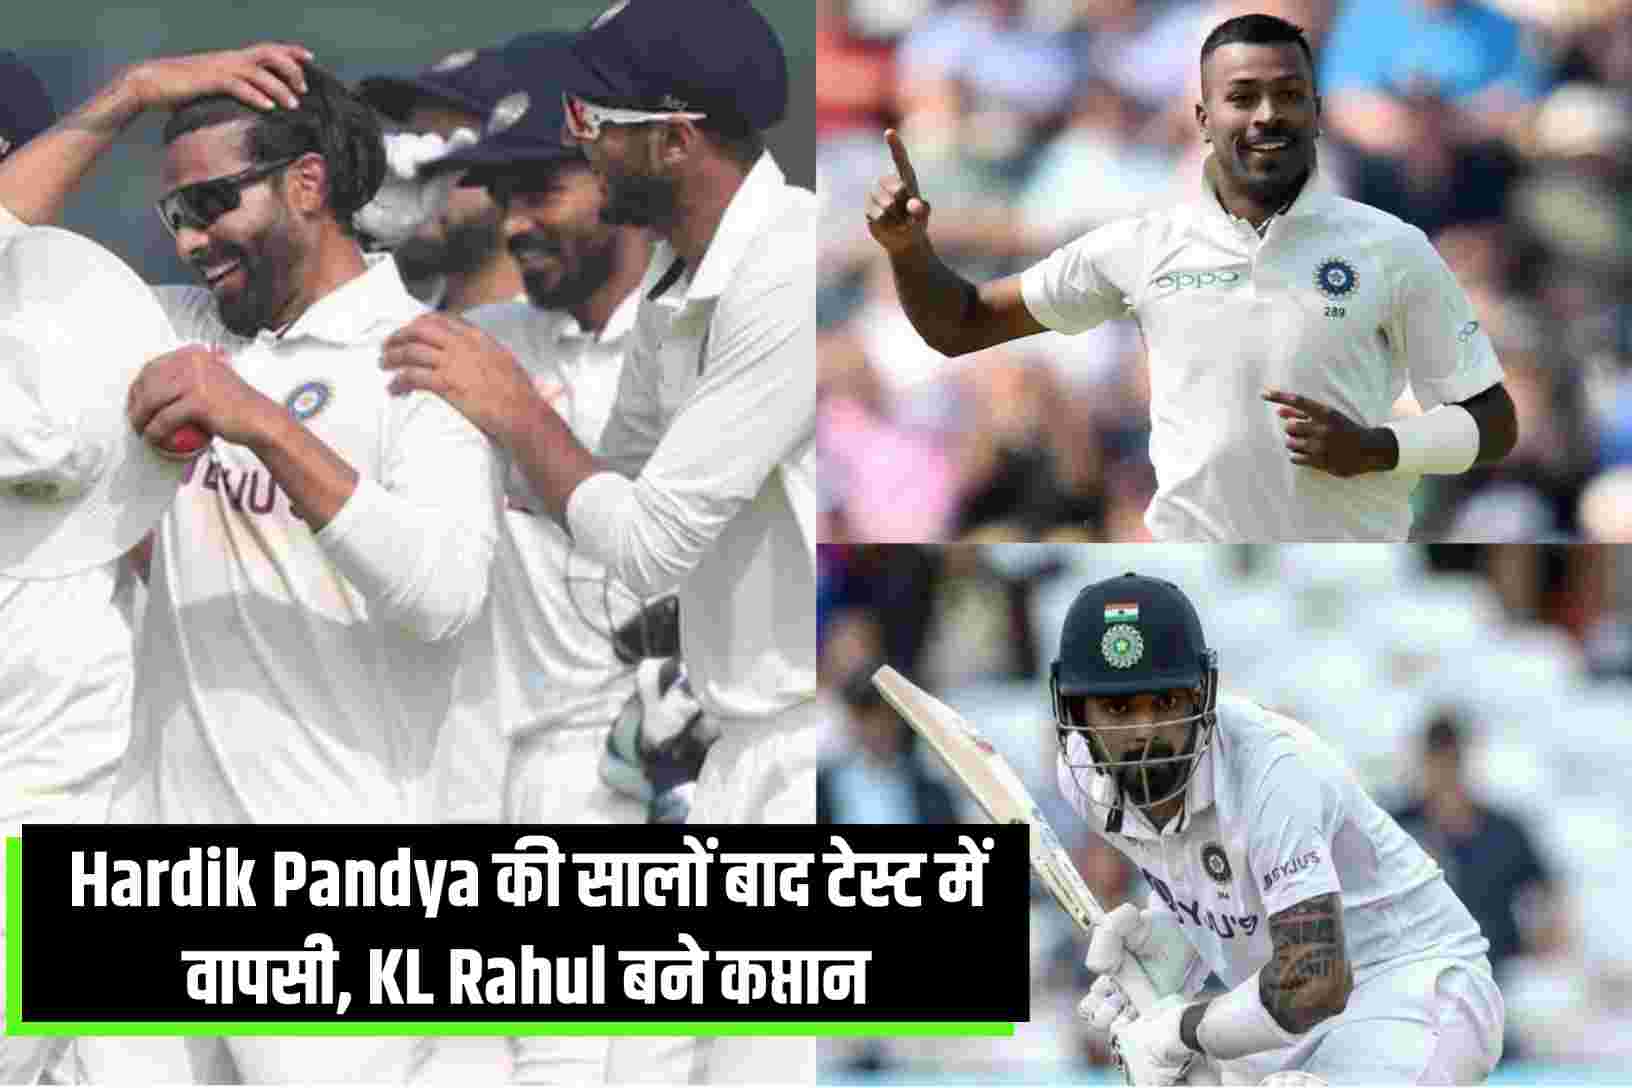 cricket/Hardik Pandya returns to Test after years